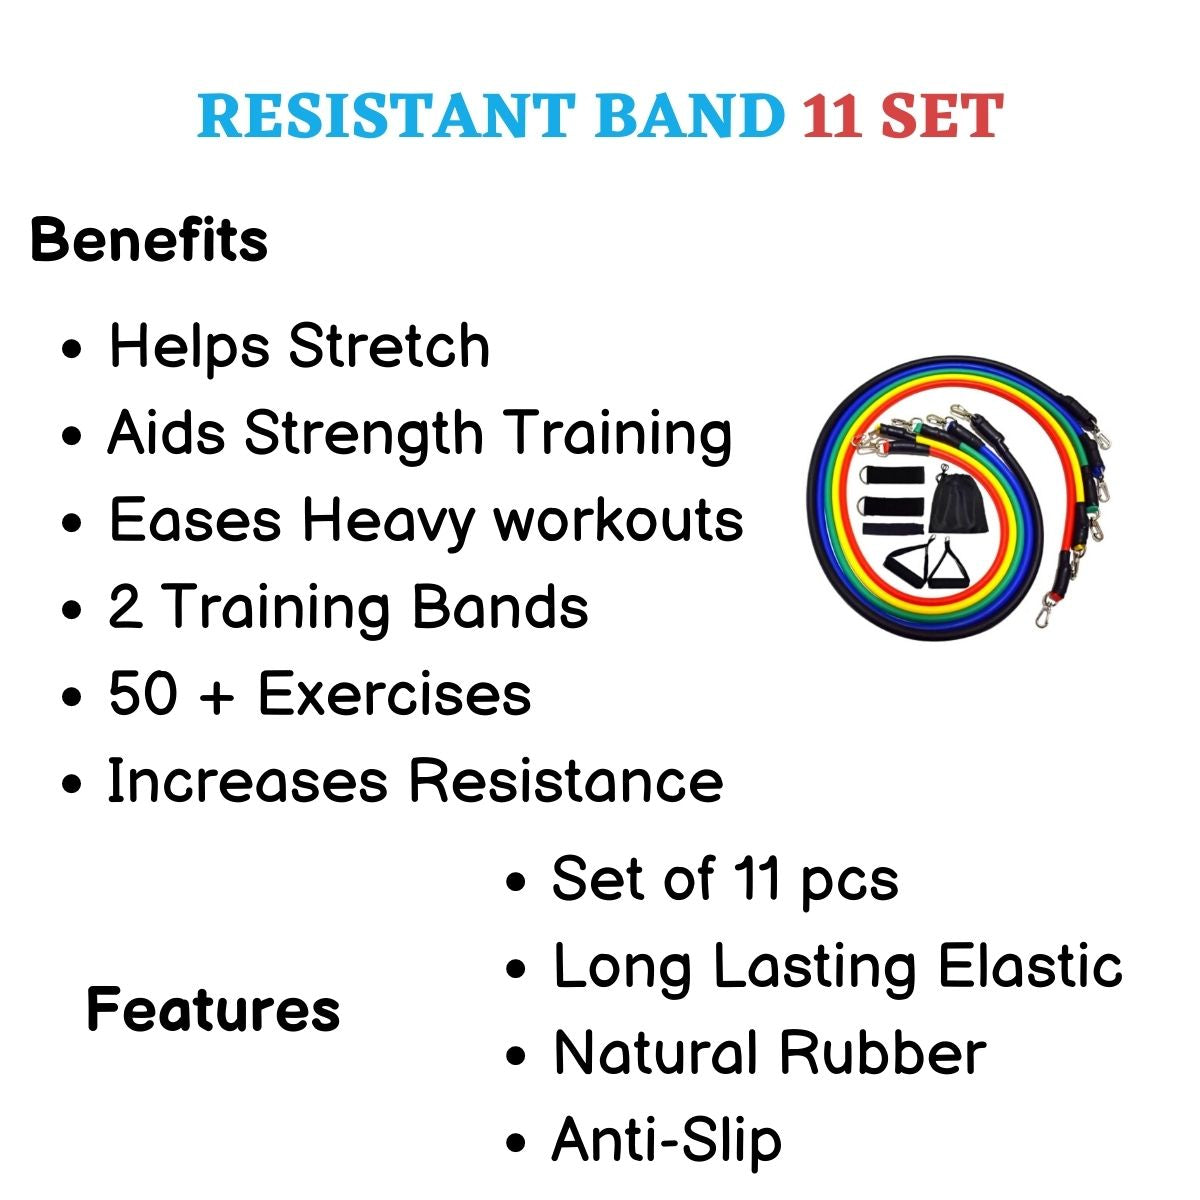 Resistant Band - 11 set